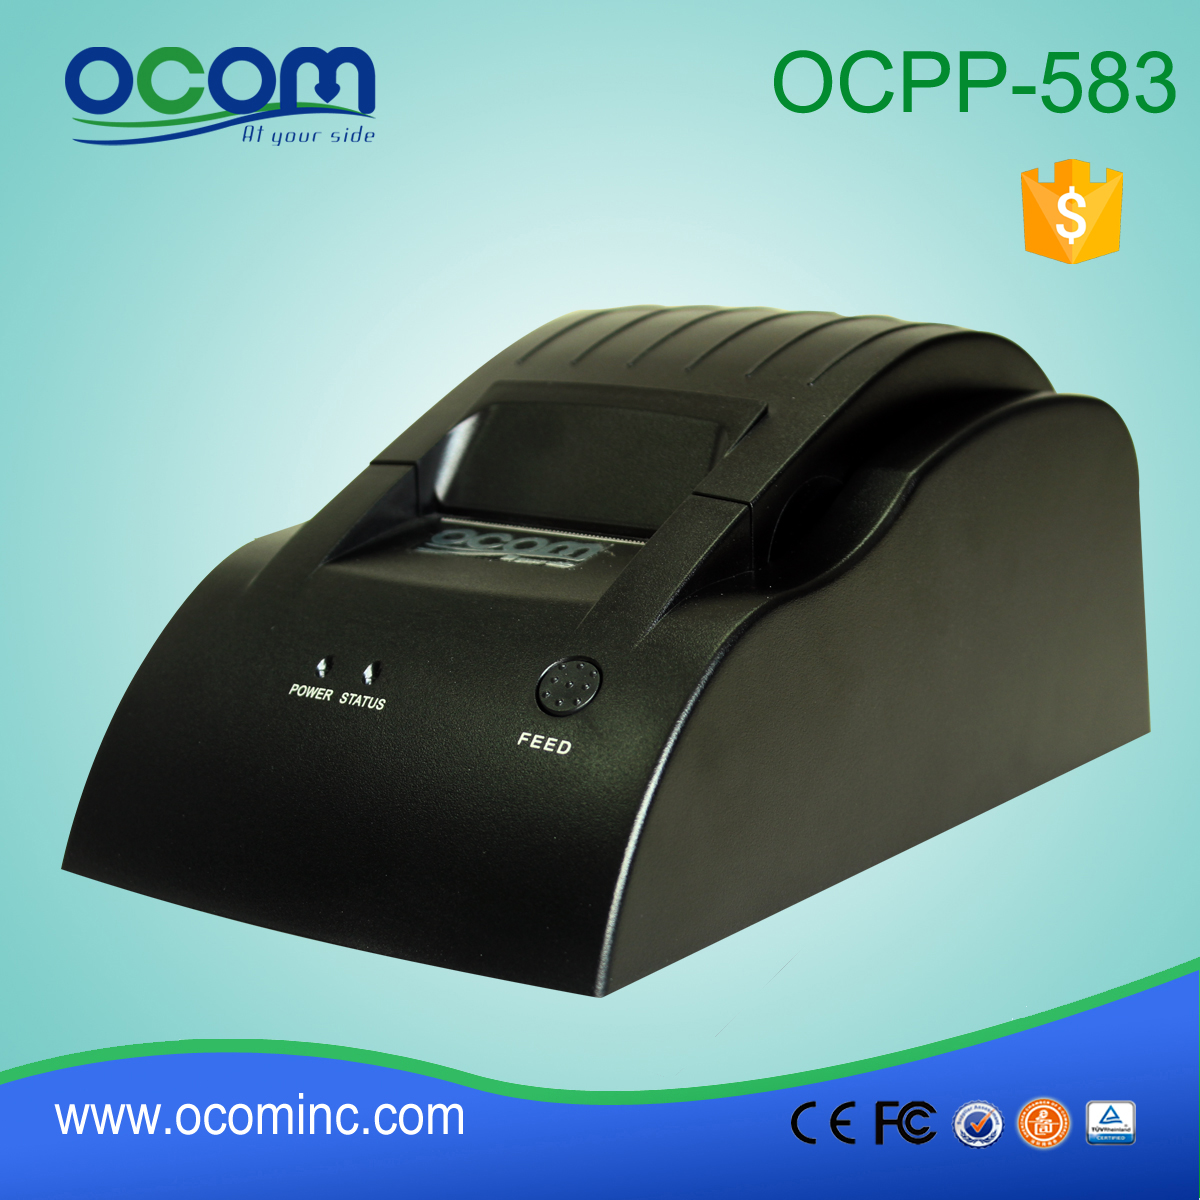 OCPP-583-R 58 χιλιοστά POS Θερμικός εκτυπωτής εισιτήριο εκτυπωτή RS232 Θύρα